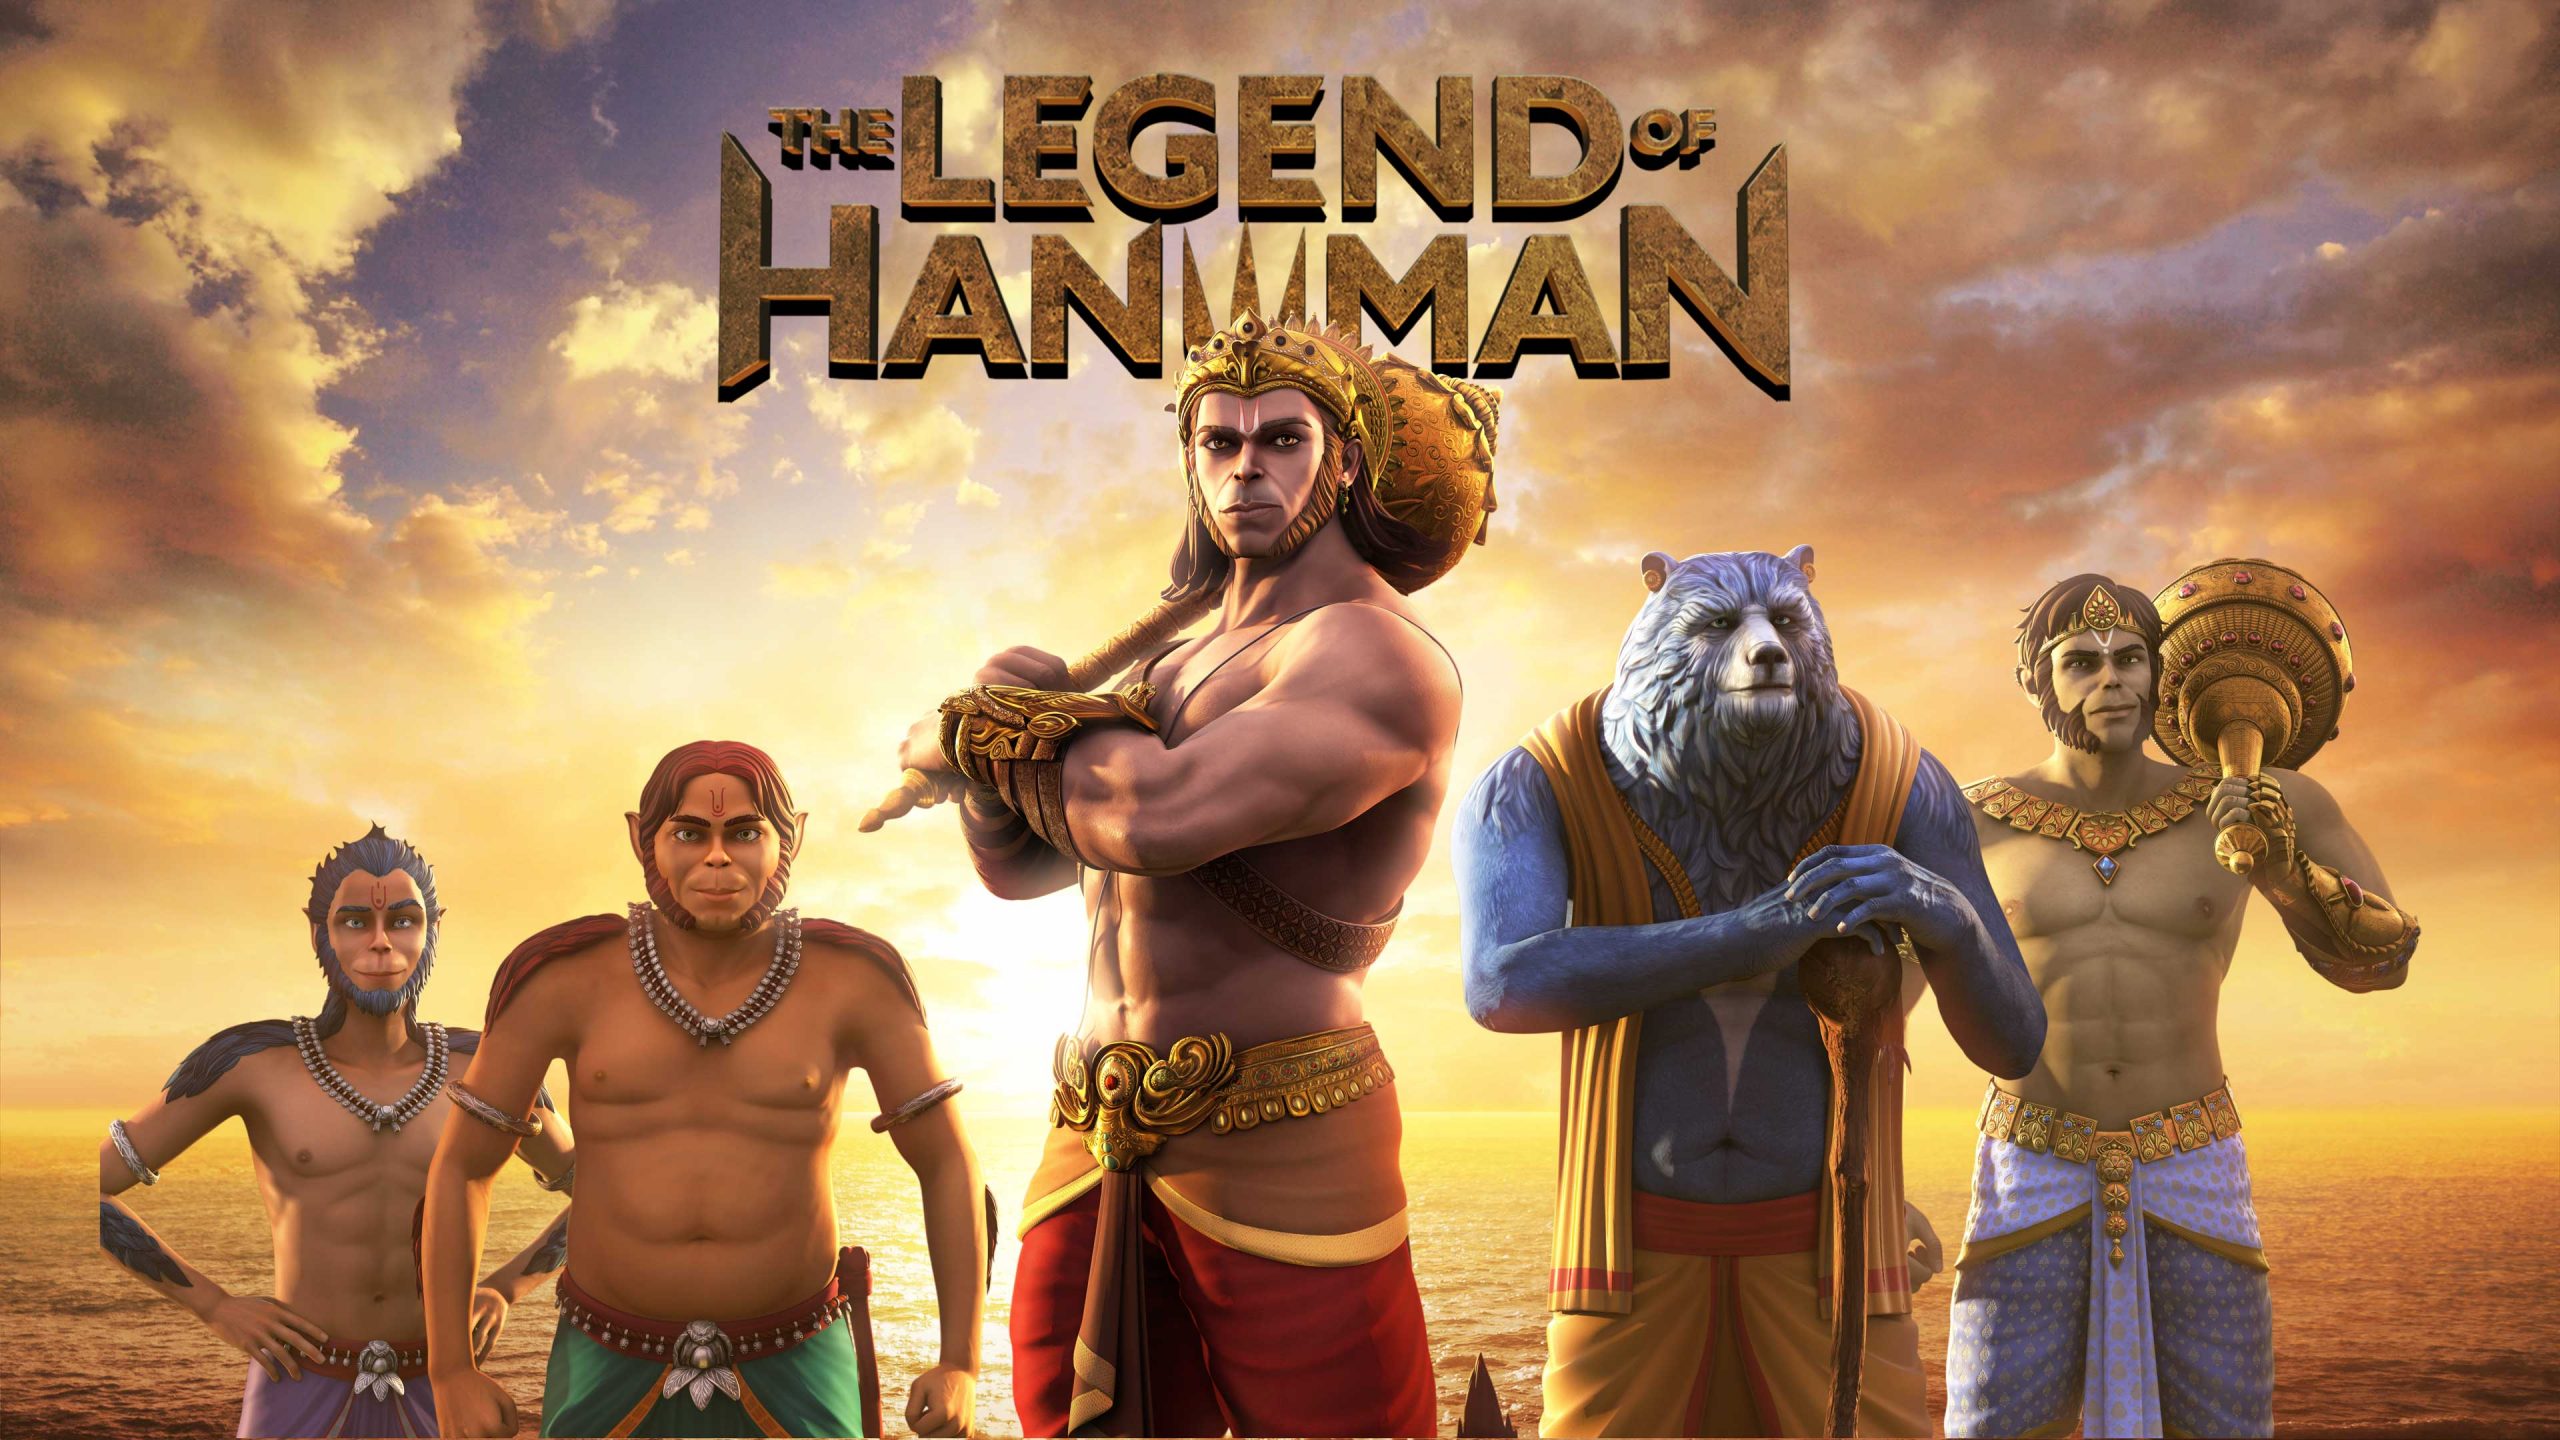 The Legend Of Hanuman Season 3 Release Date